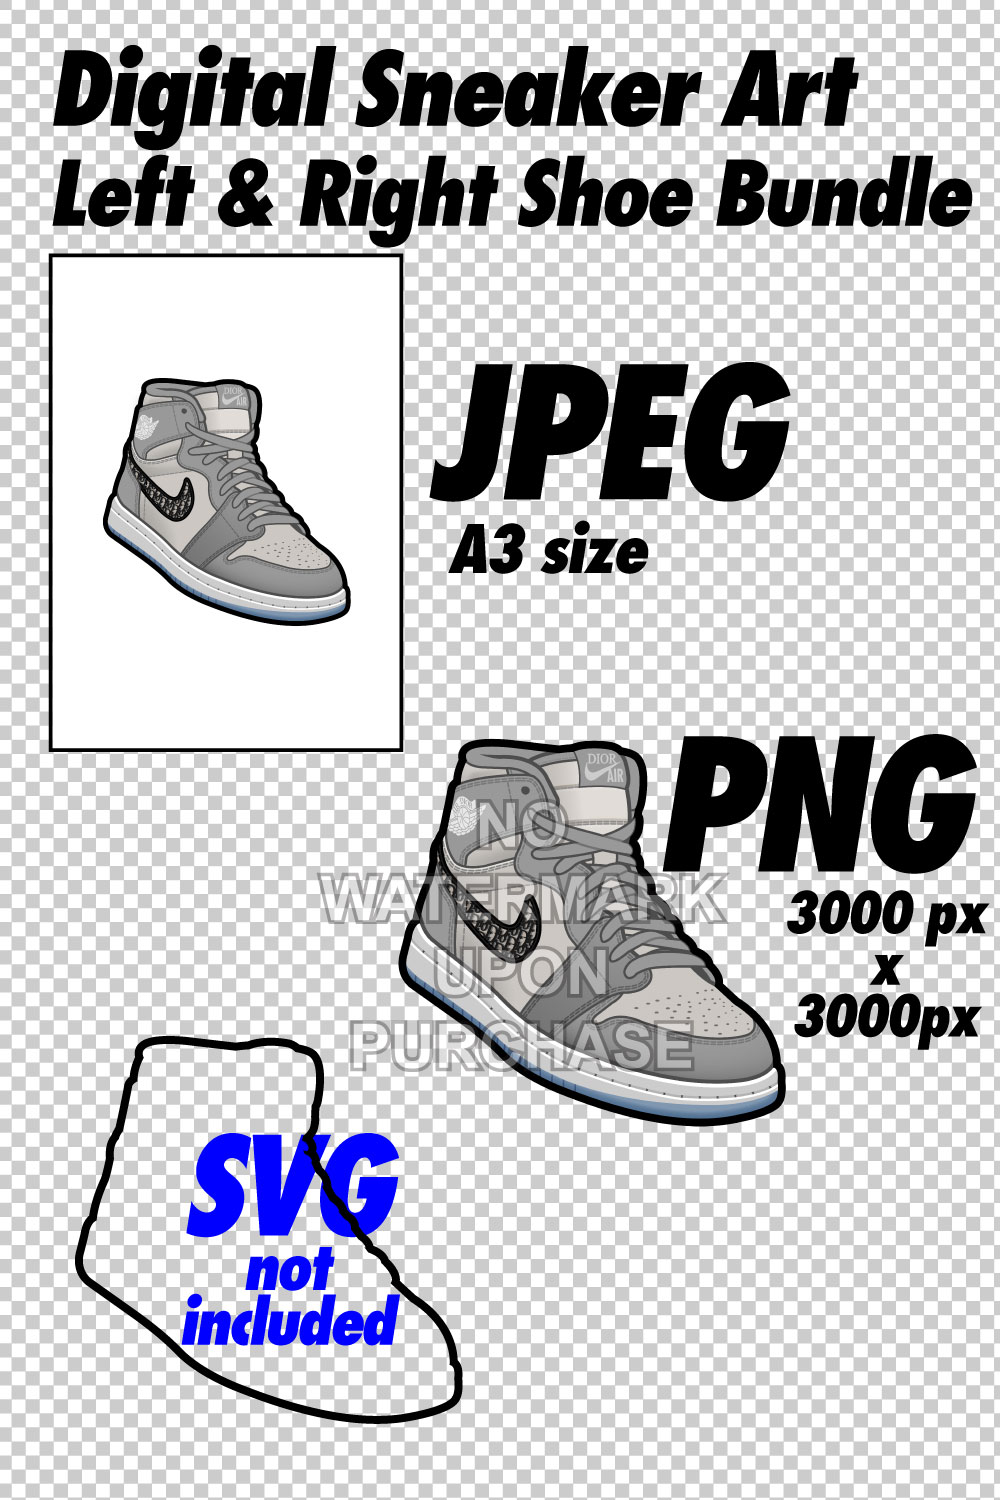 Air Jordan 1 Dior JPEG PNG left and right shoe bundle pinterest preview image.